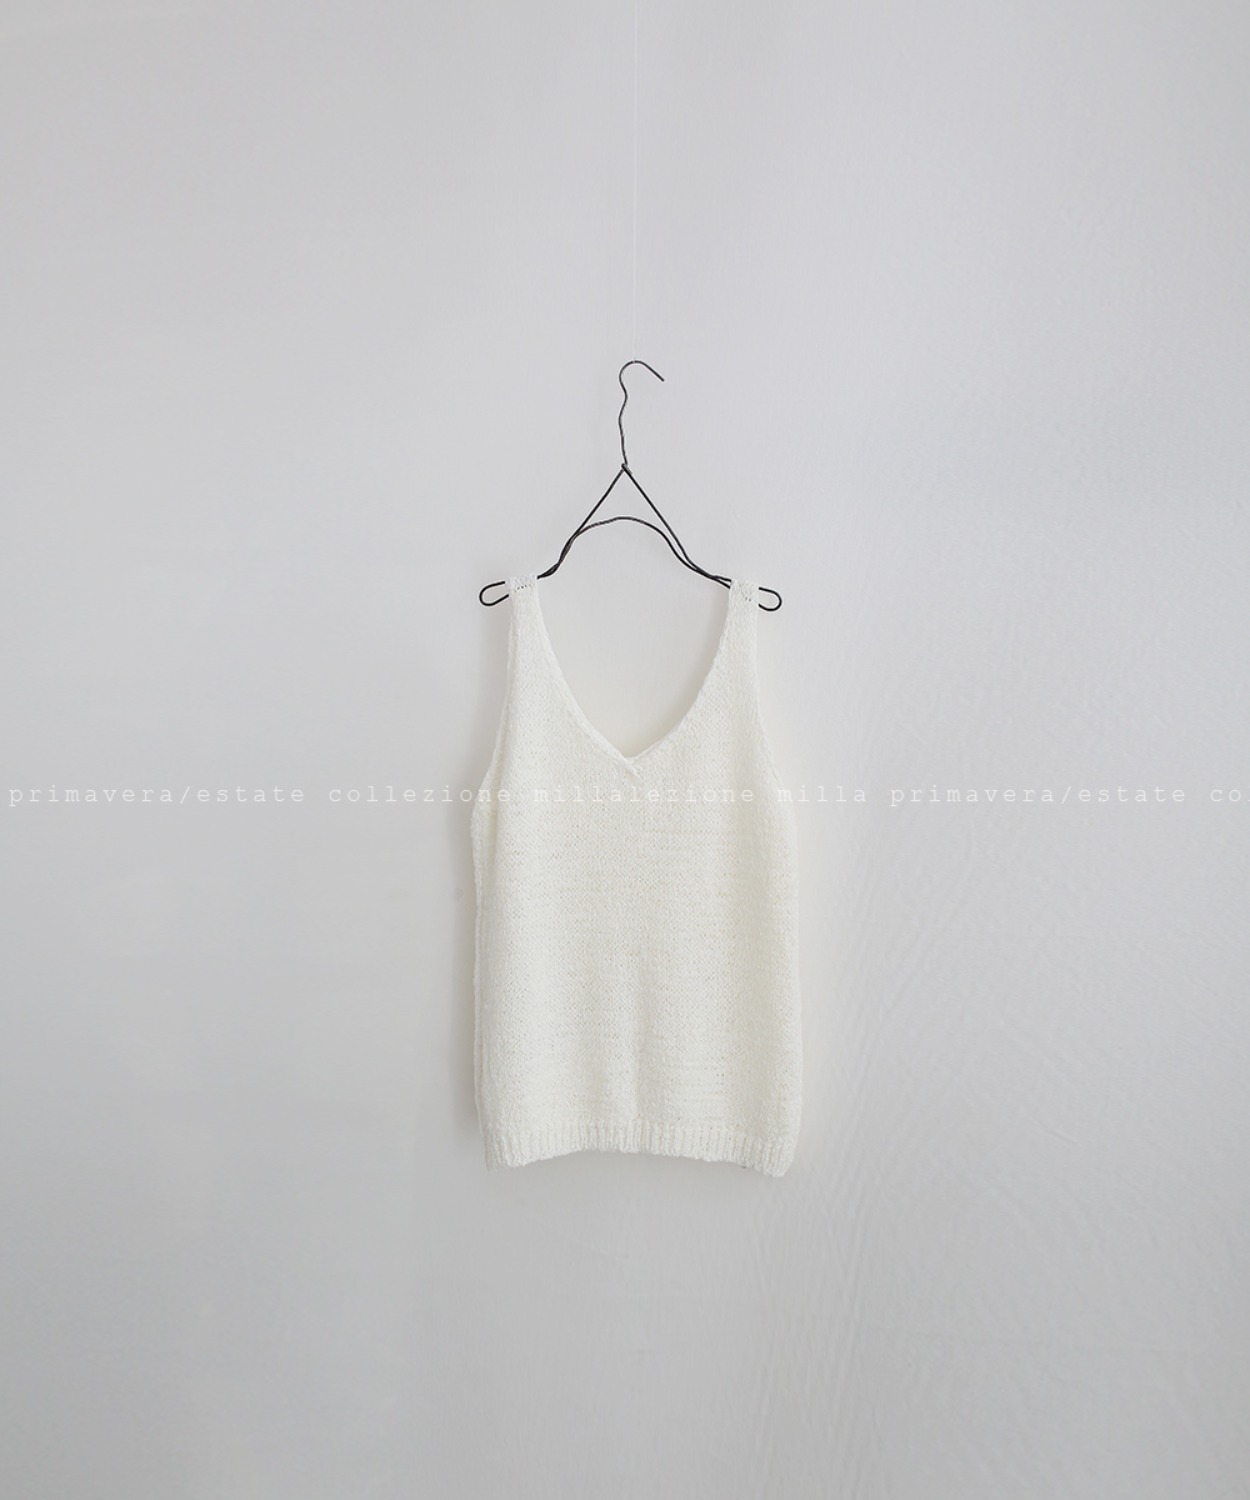 N°004 knits